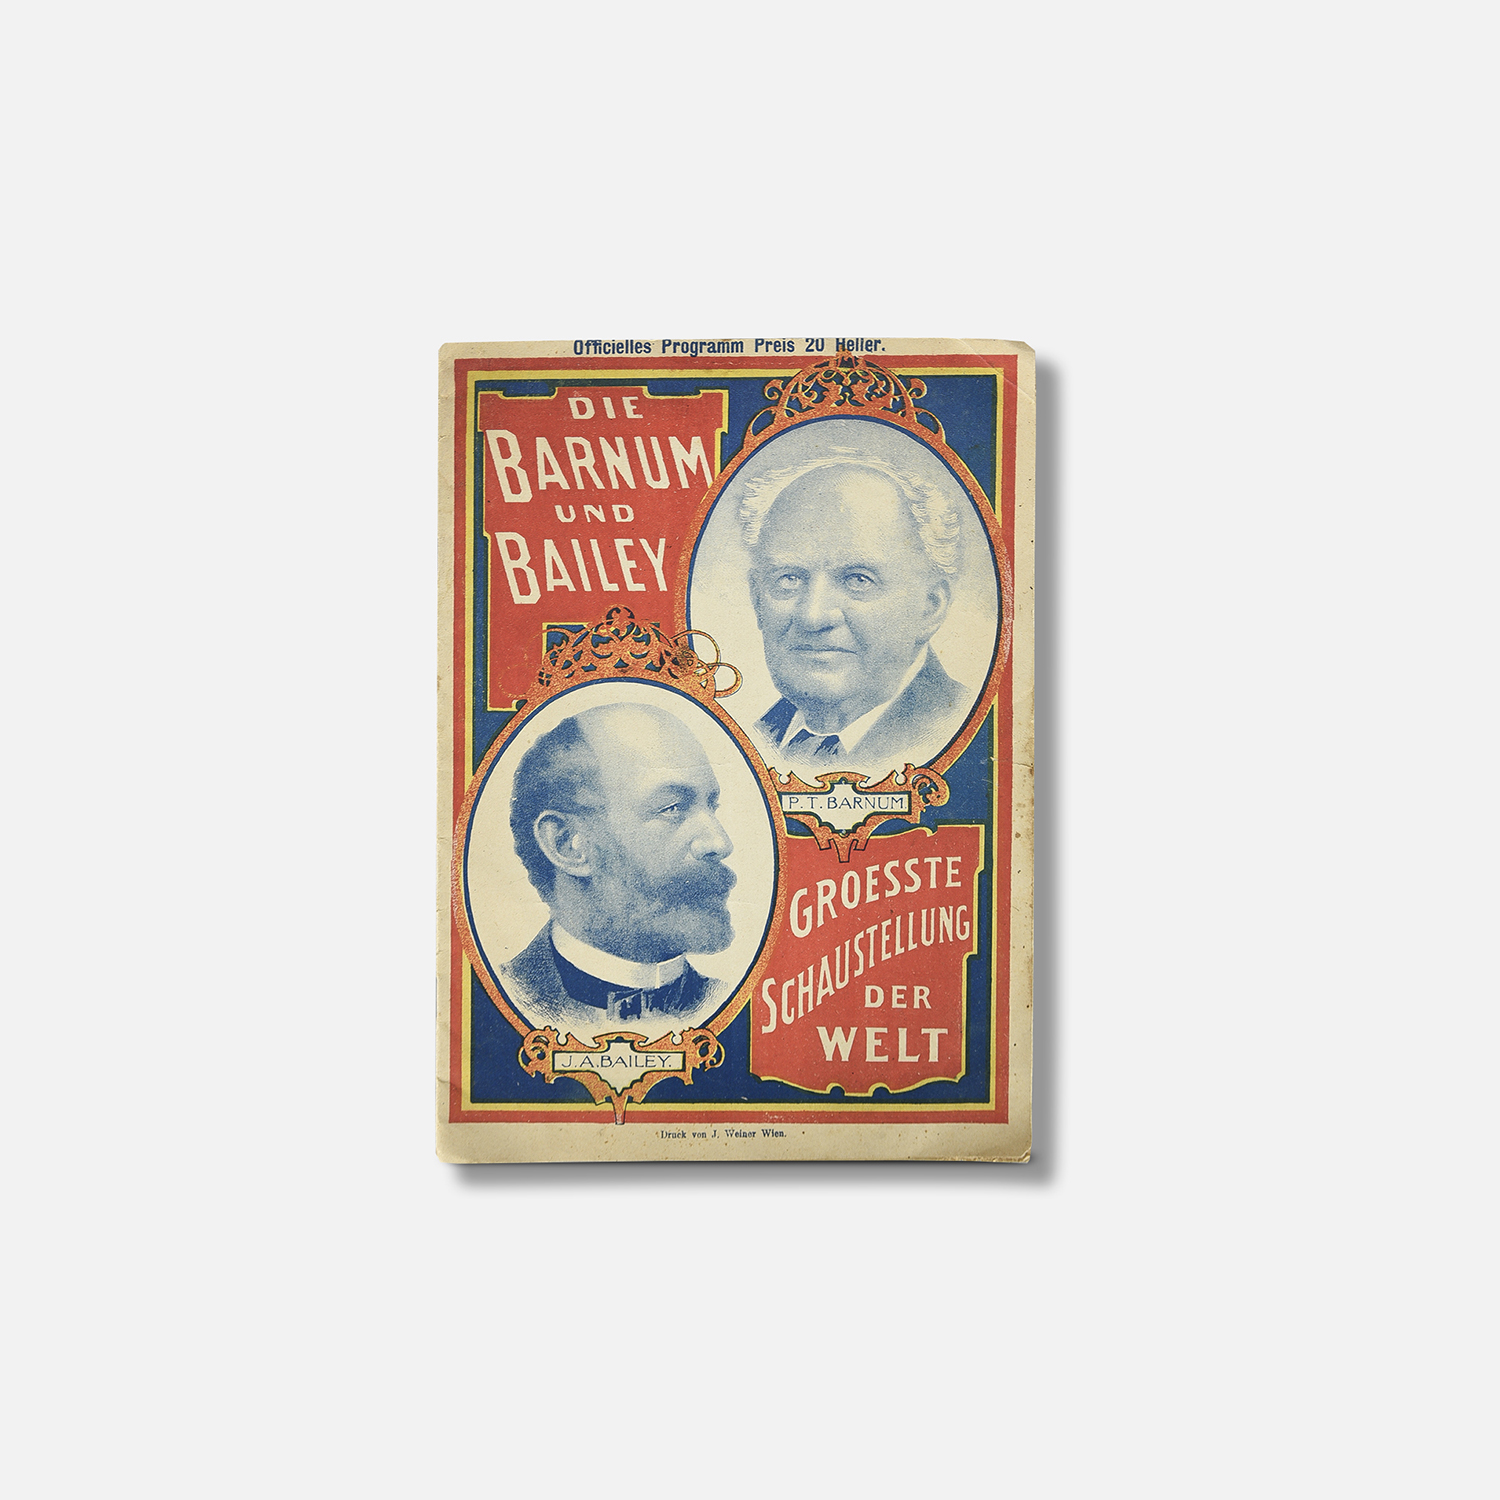 1901 Barnum & Baily Program